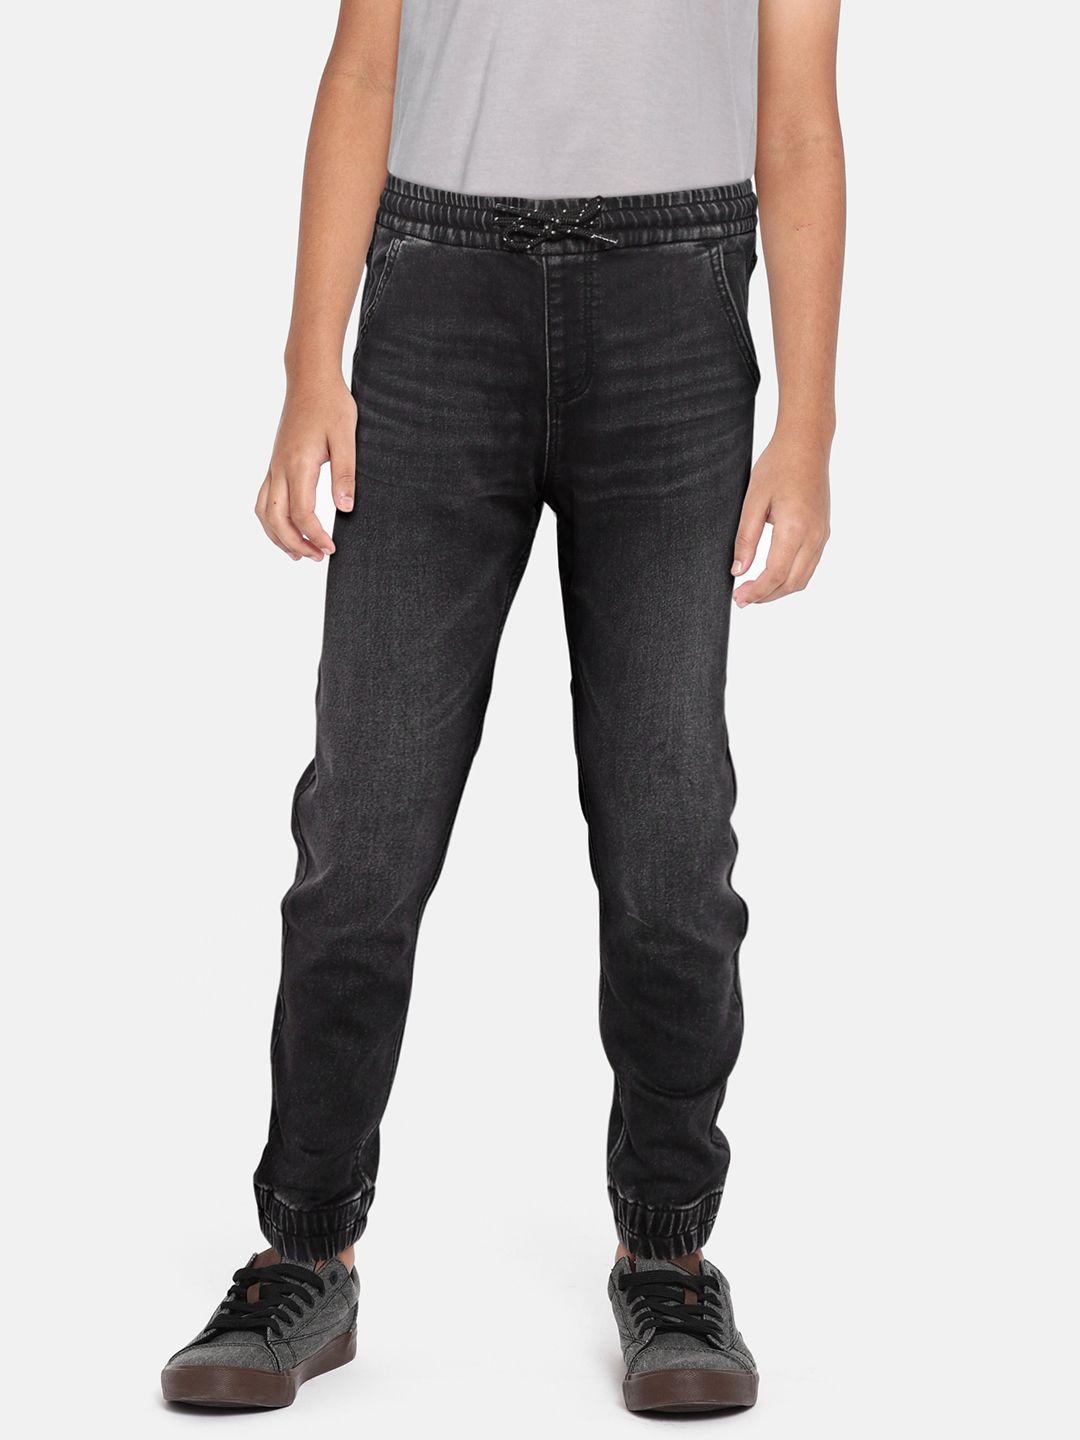 Marks & Spencer Boys Black Jogger Light Fade Stretchable Jeans